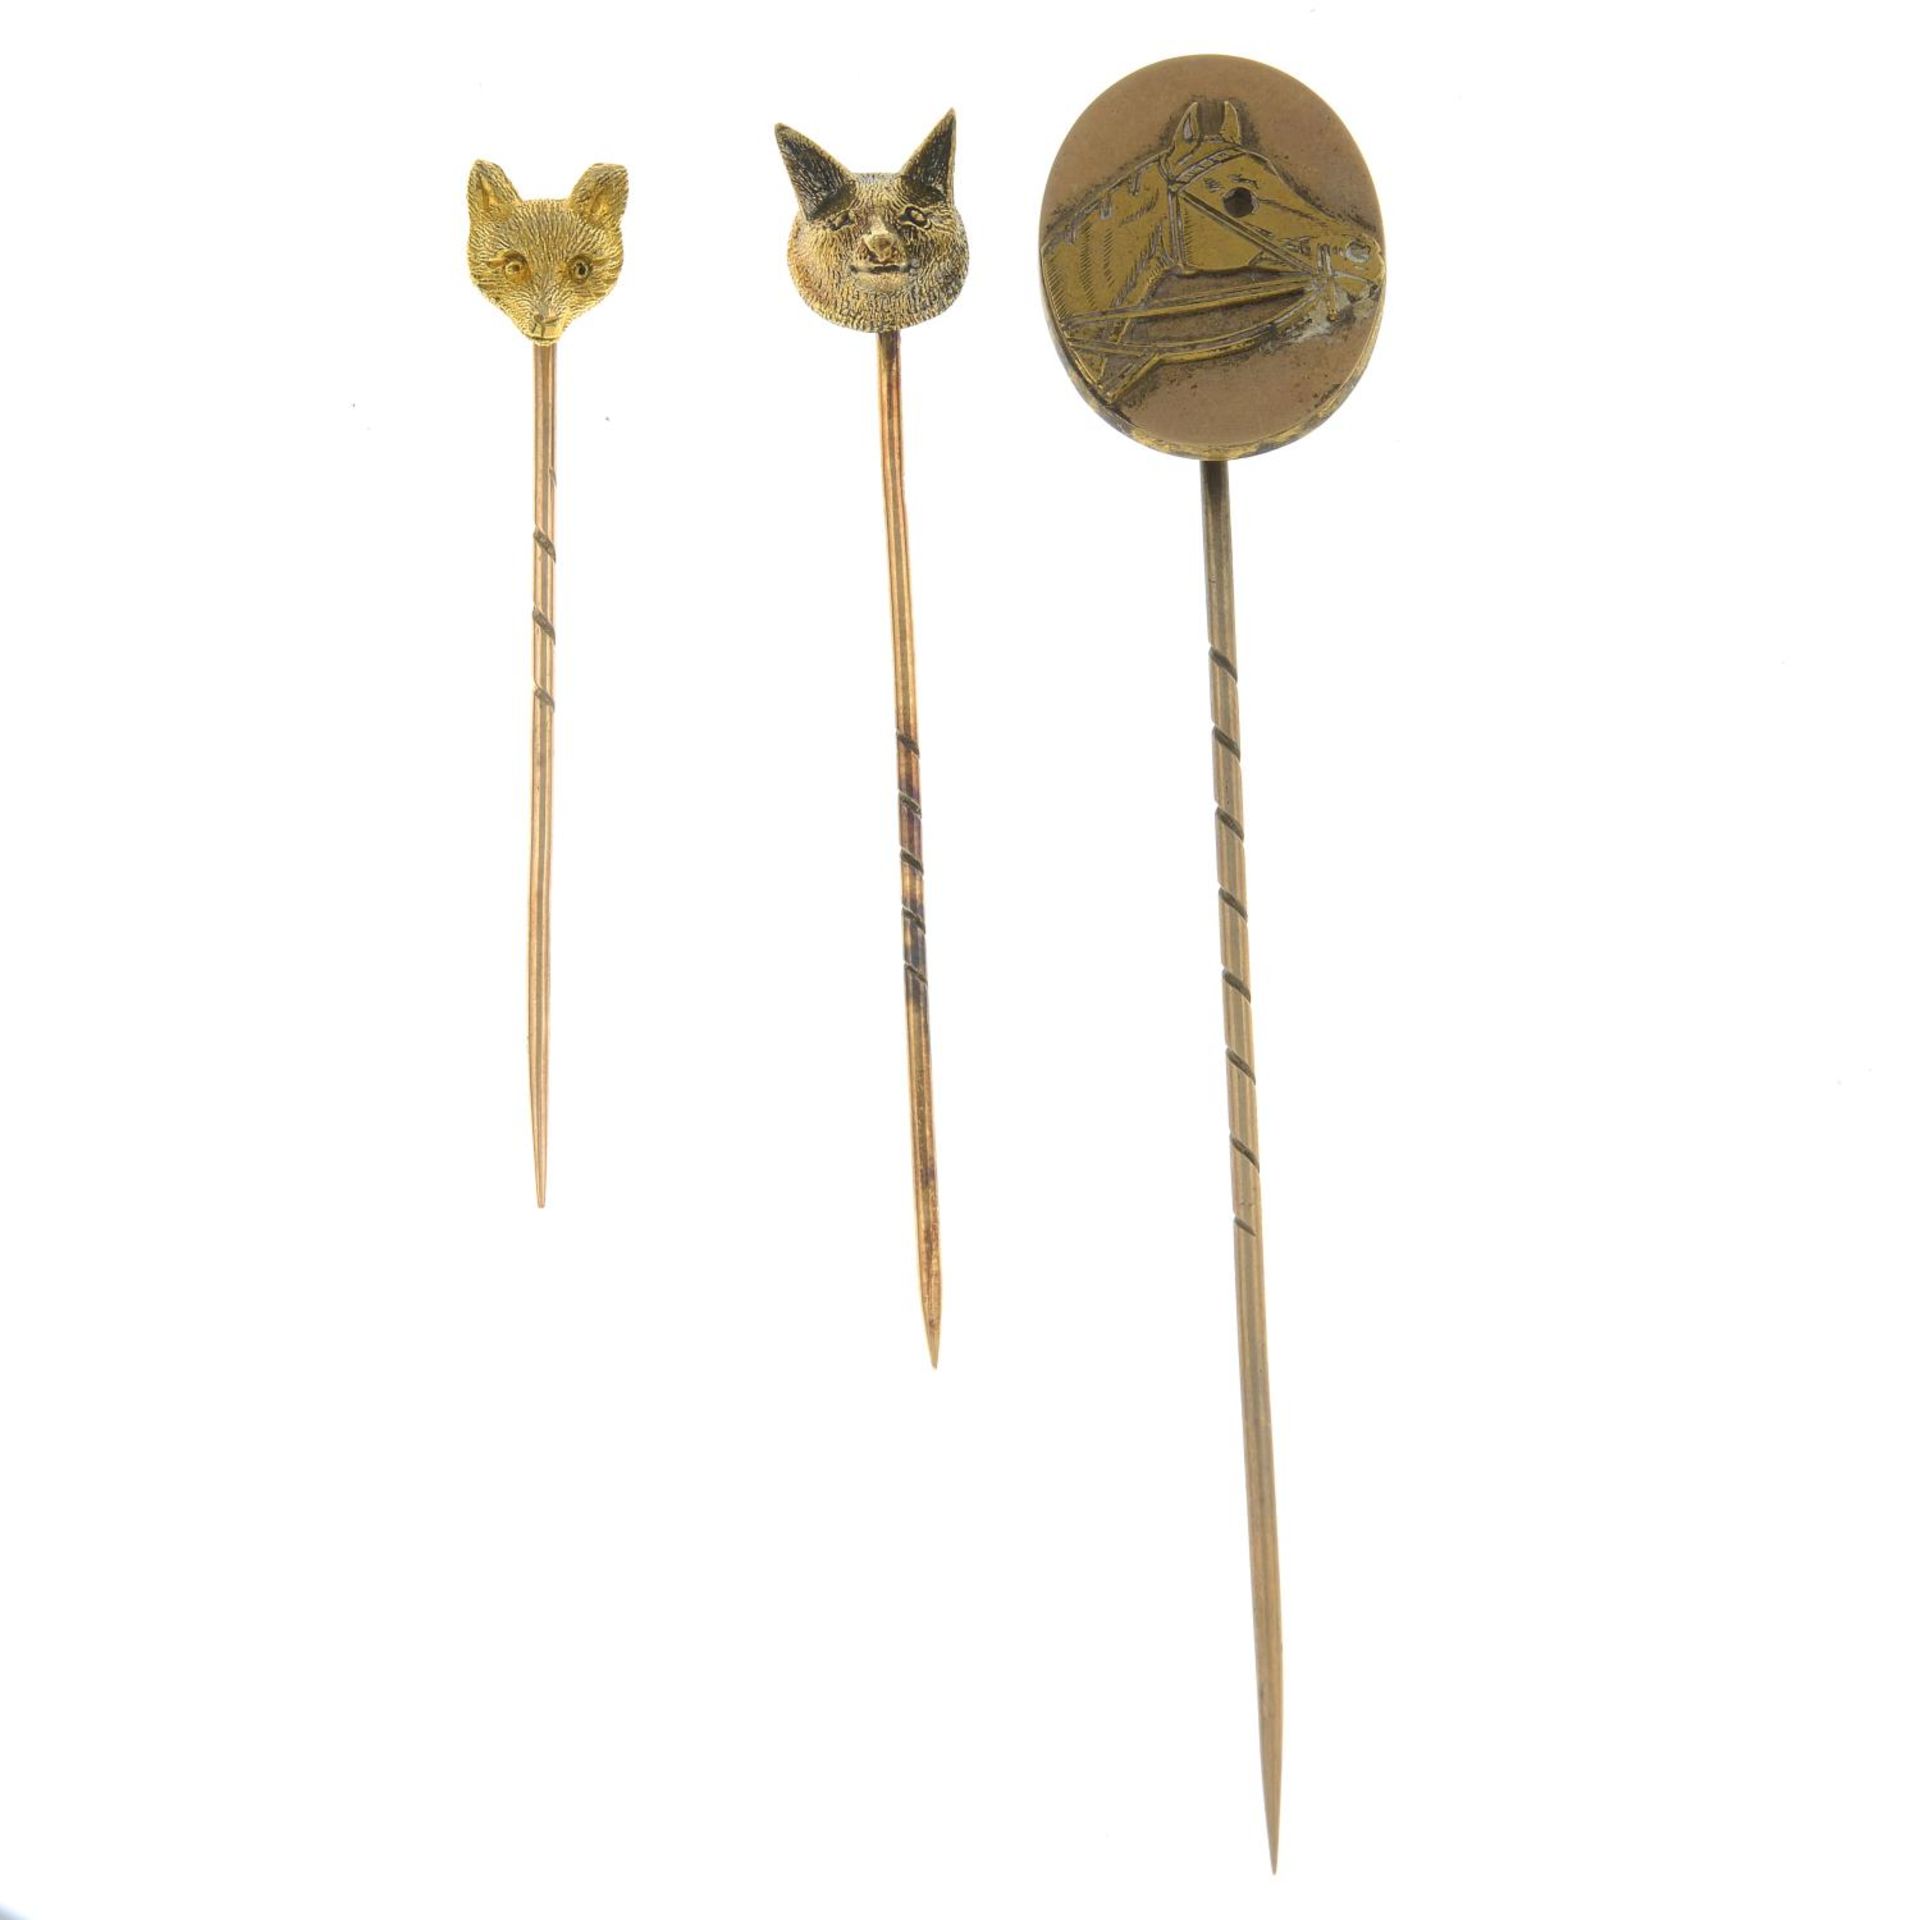 Fox head stickpin, length of stickpin head 1.1cms, 1.3gms. - Image 2 of 2